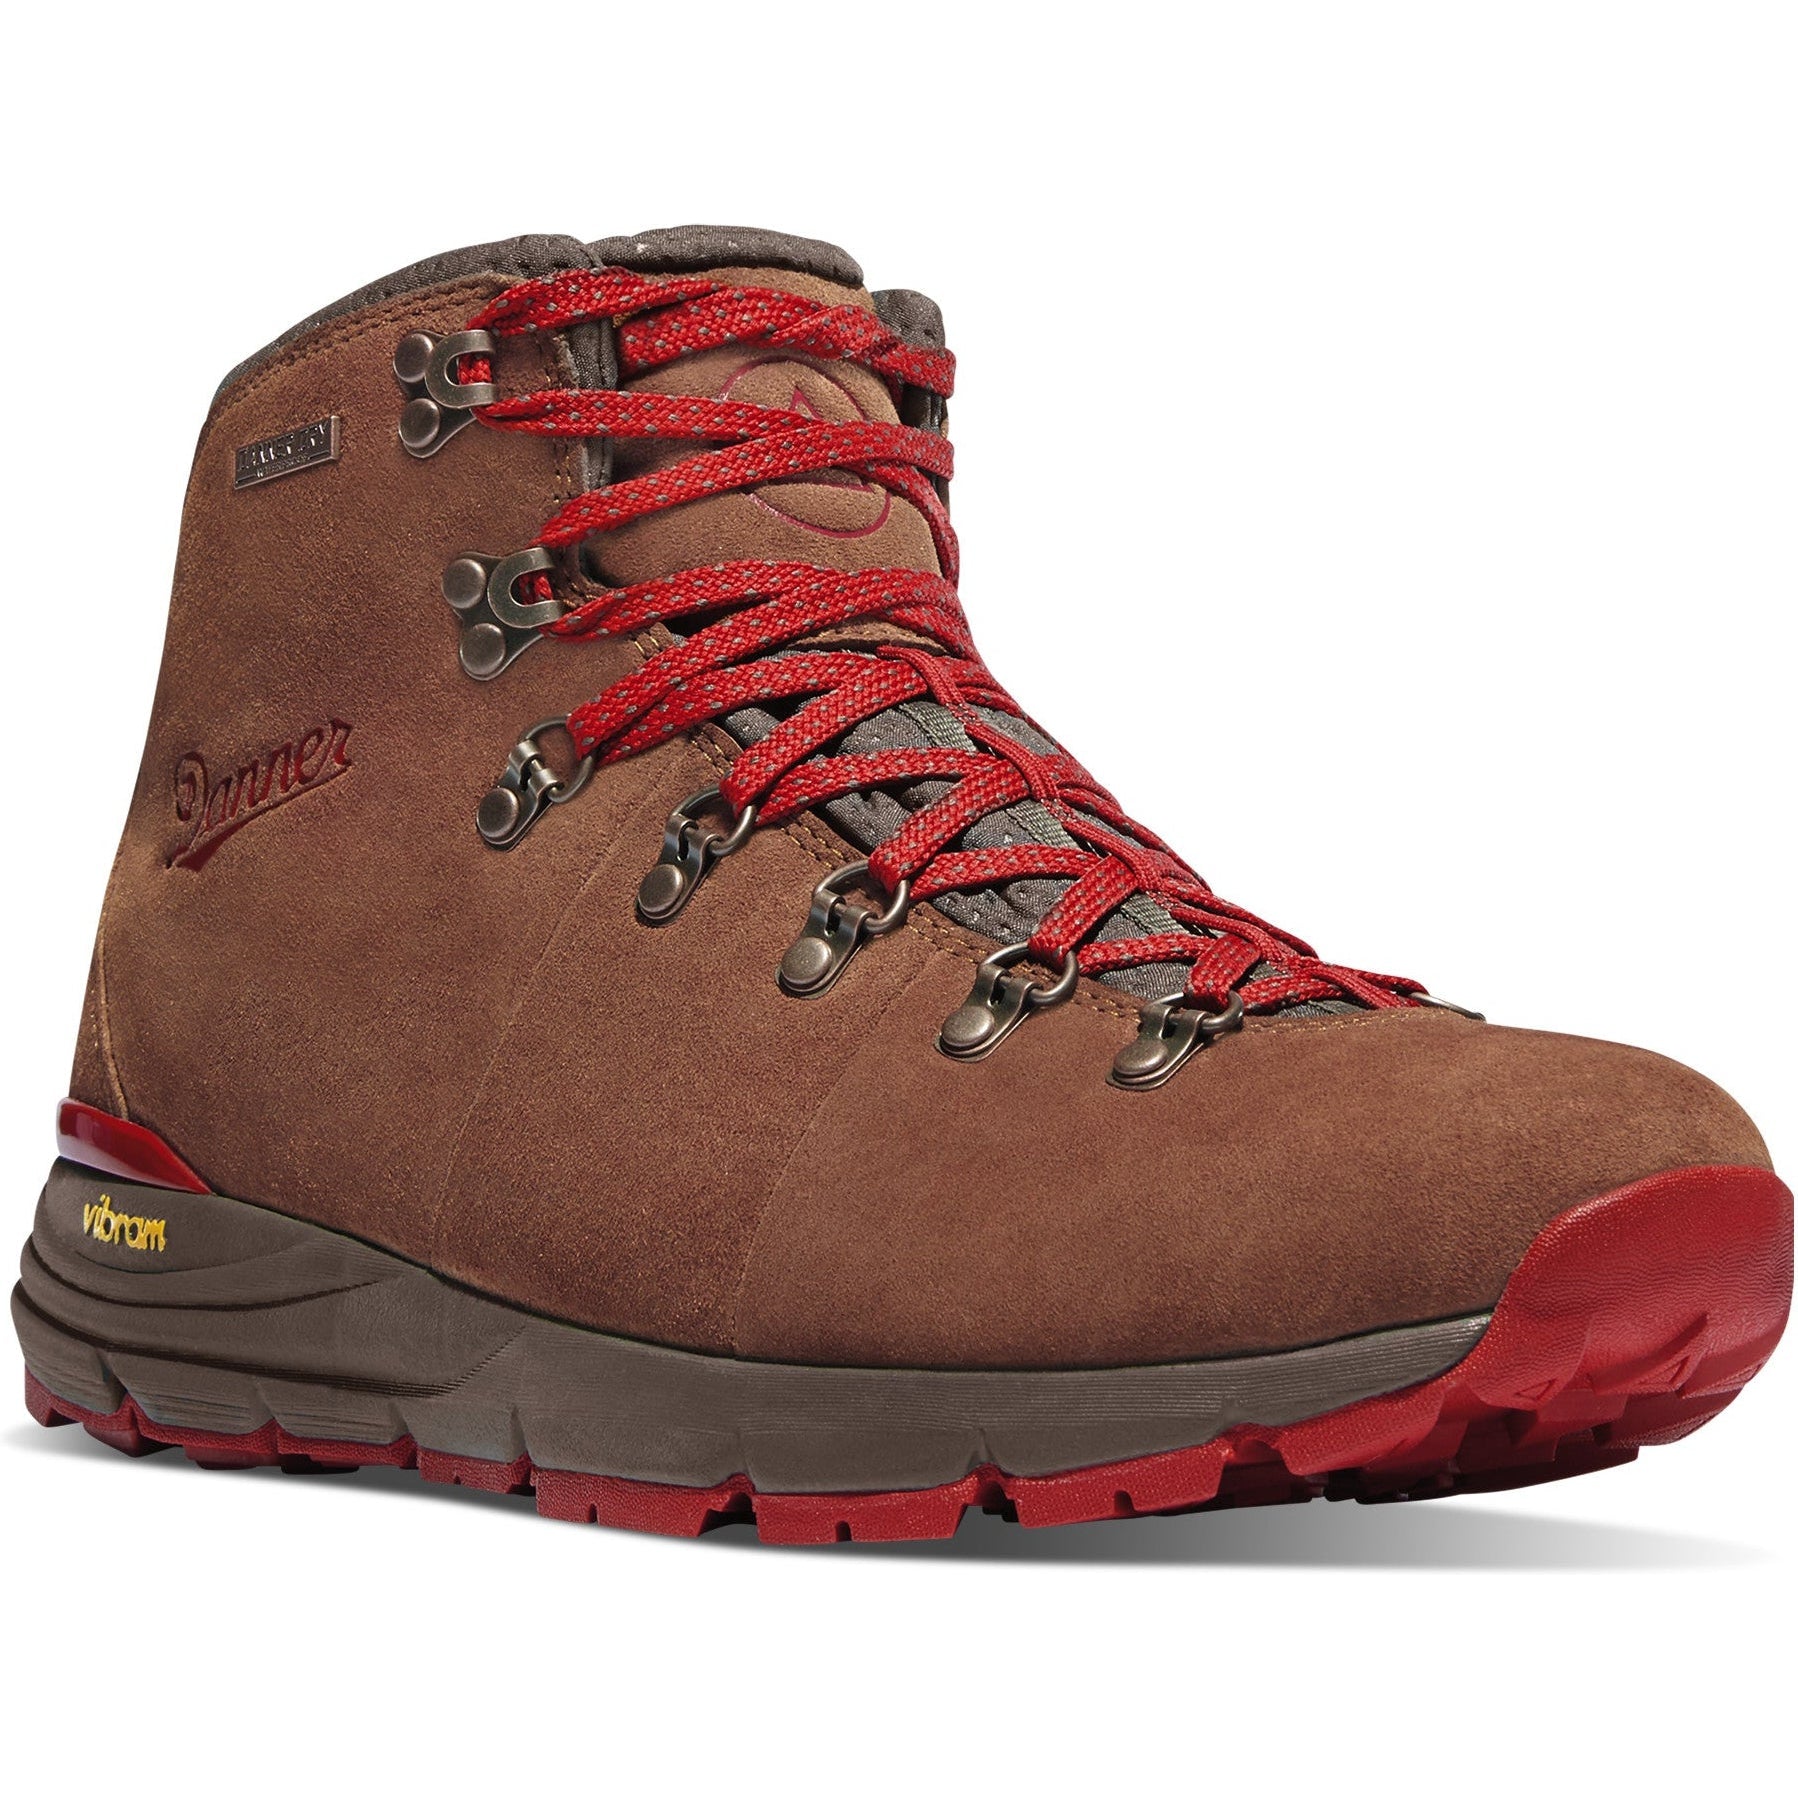 Danner Women's Mountain 600 4.5" WP Hiking Boot - Brown/Red - 62245 6 / Medium / Brown - Overlook Boots